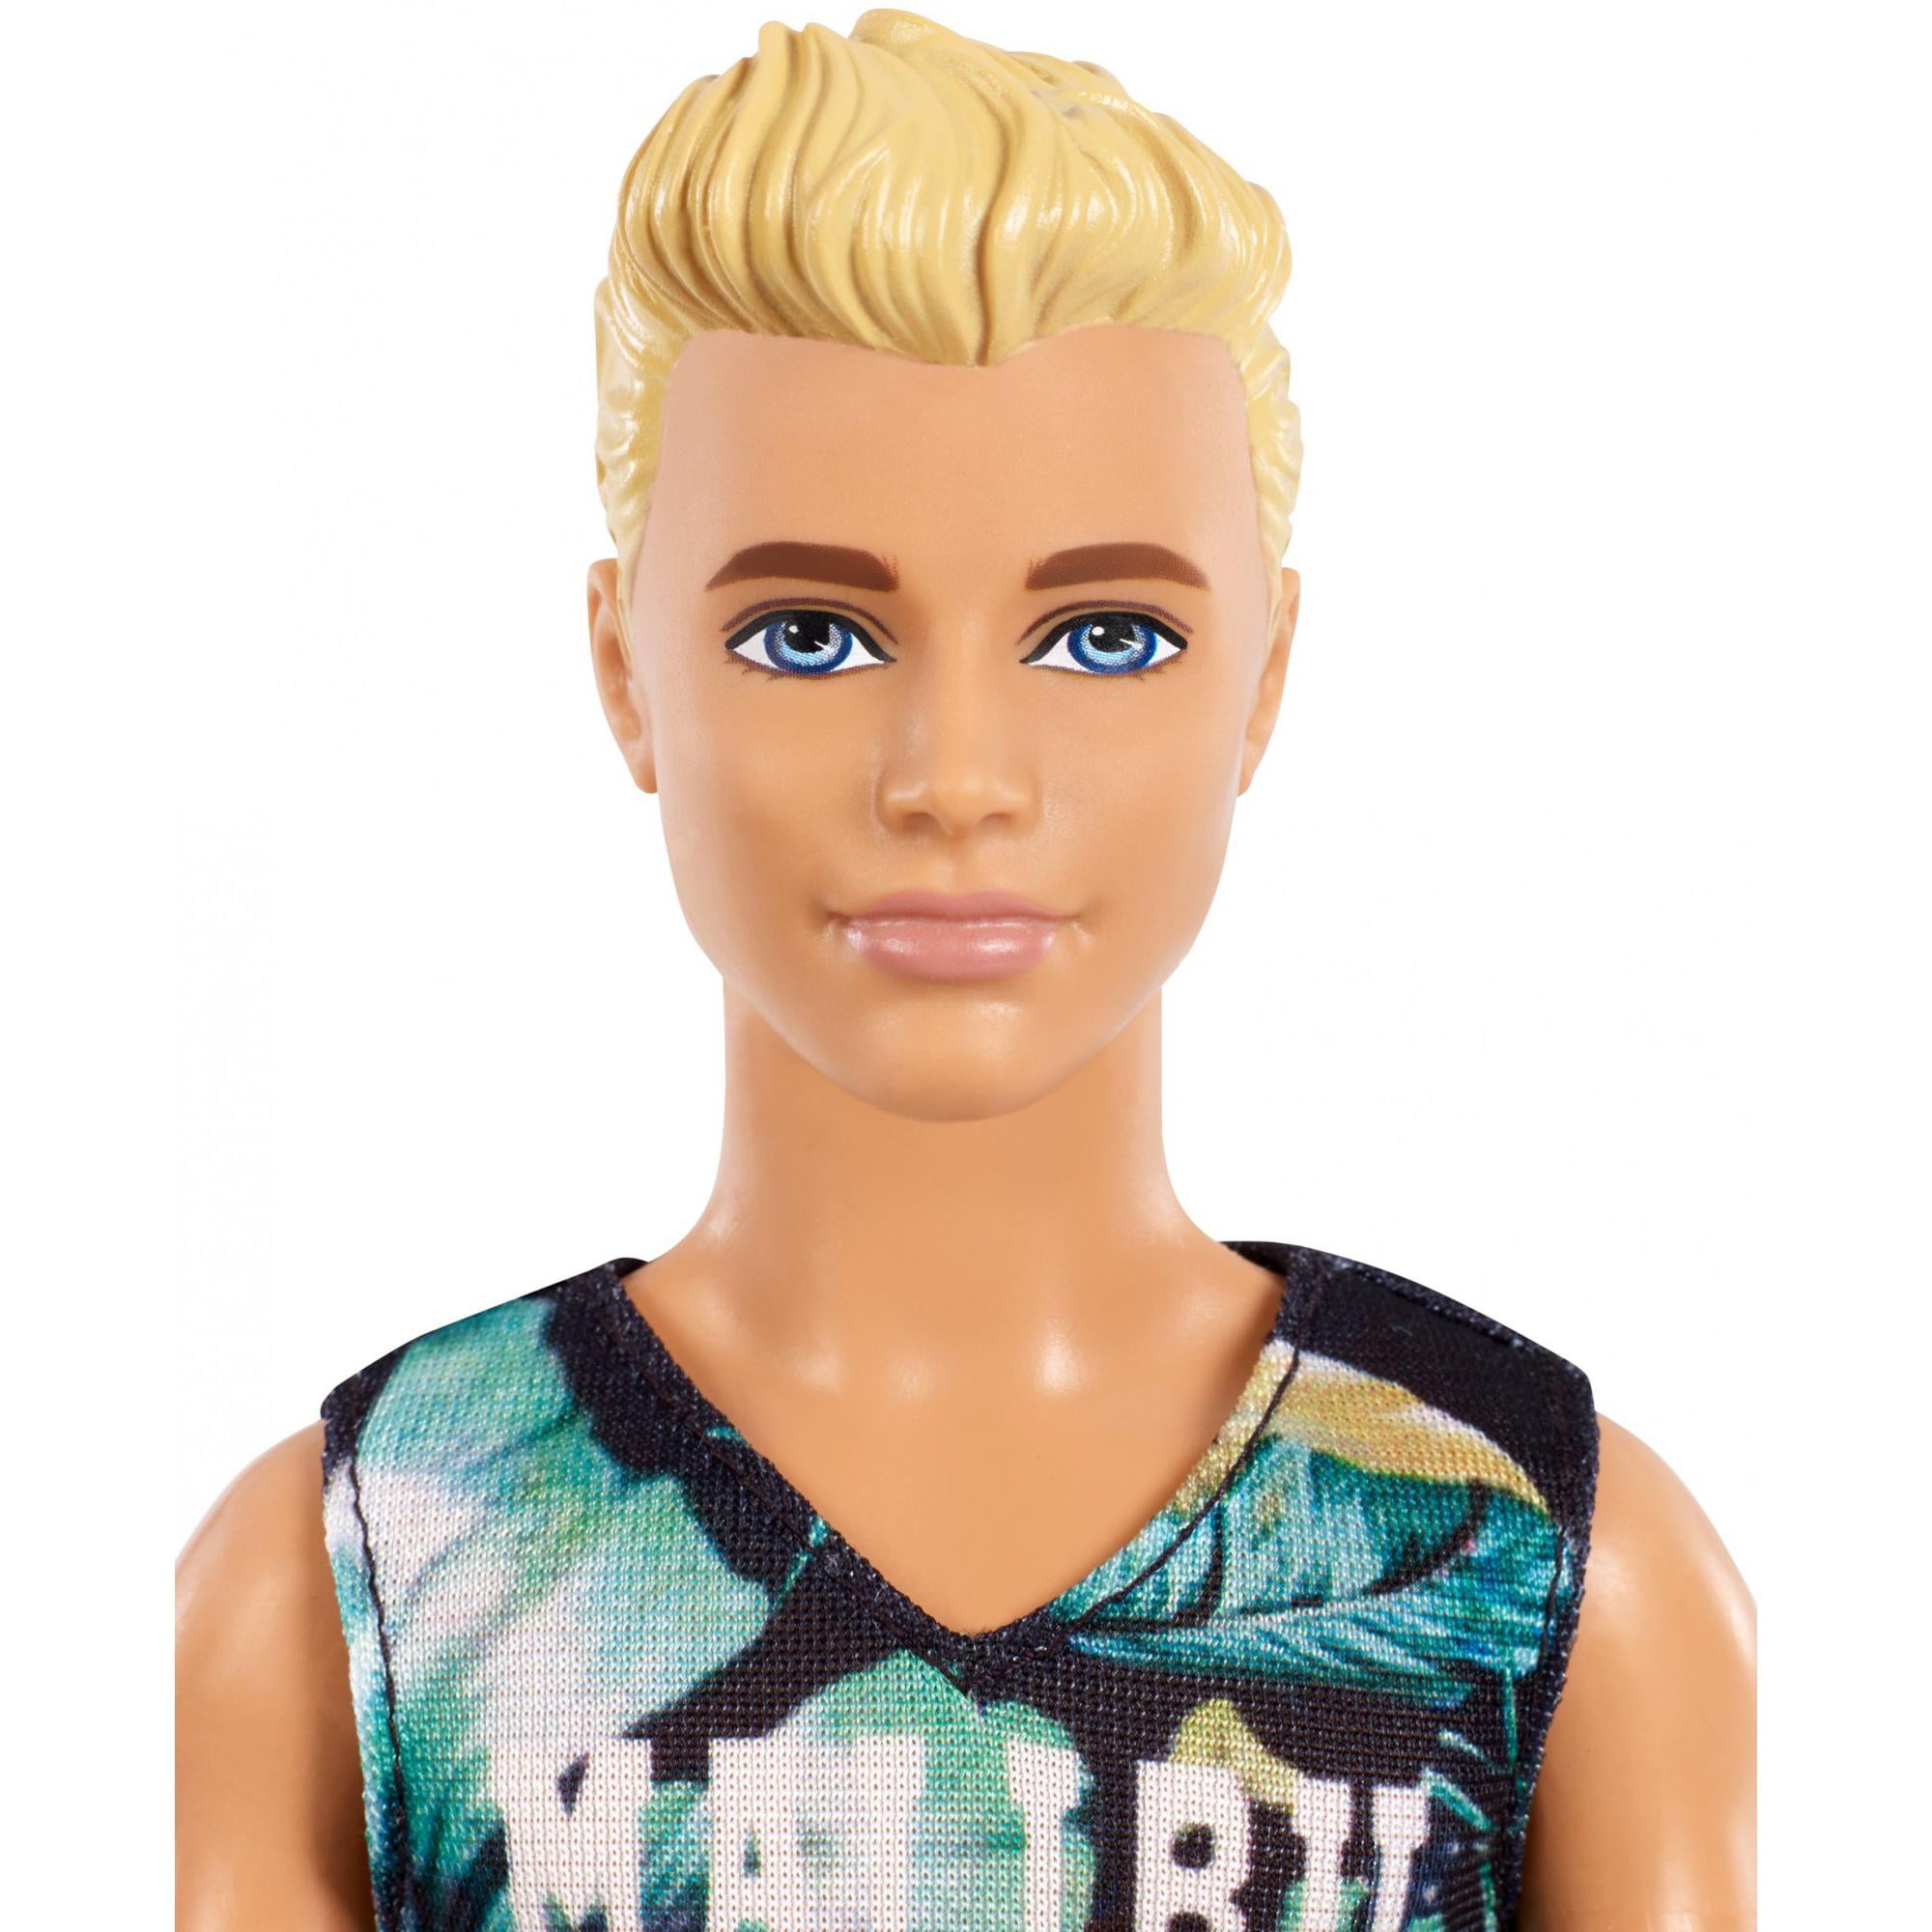 Rocker 2021 Malibu Blonde Any 2 For £34.99 Barbie Ken Fashionistas Dolls Polo 